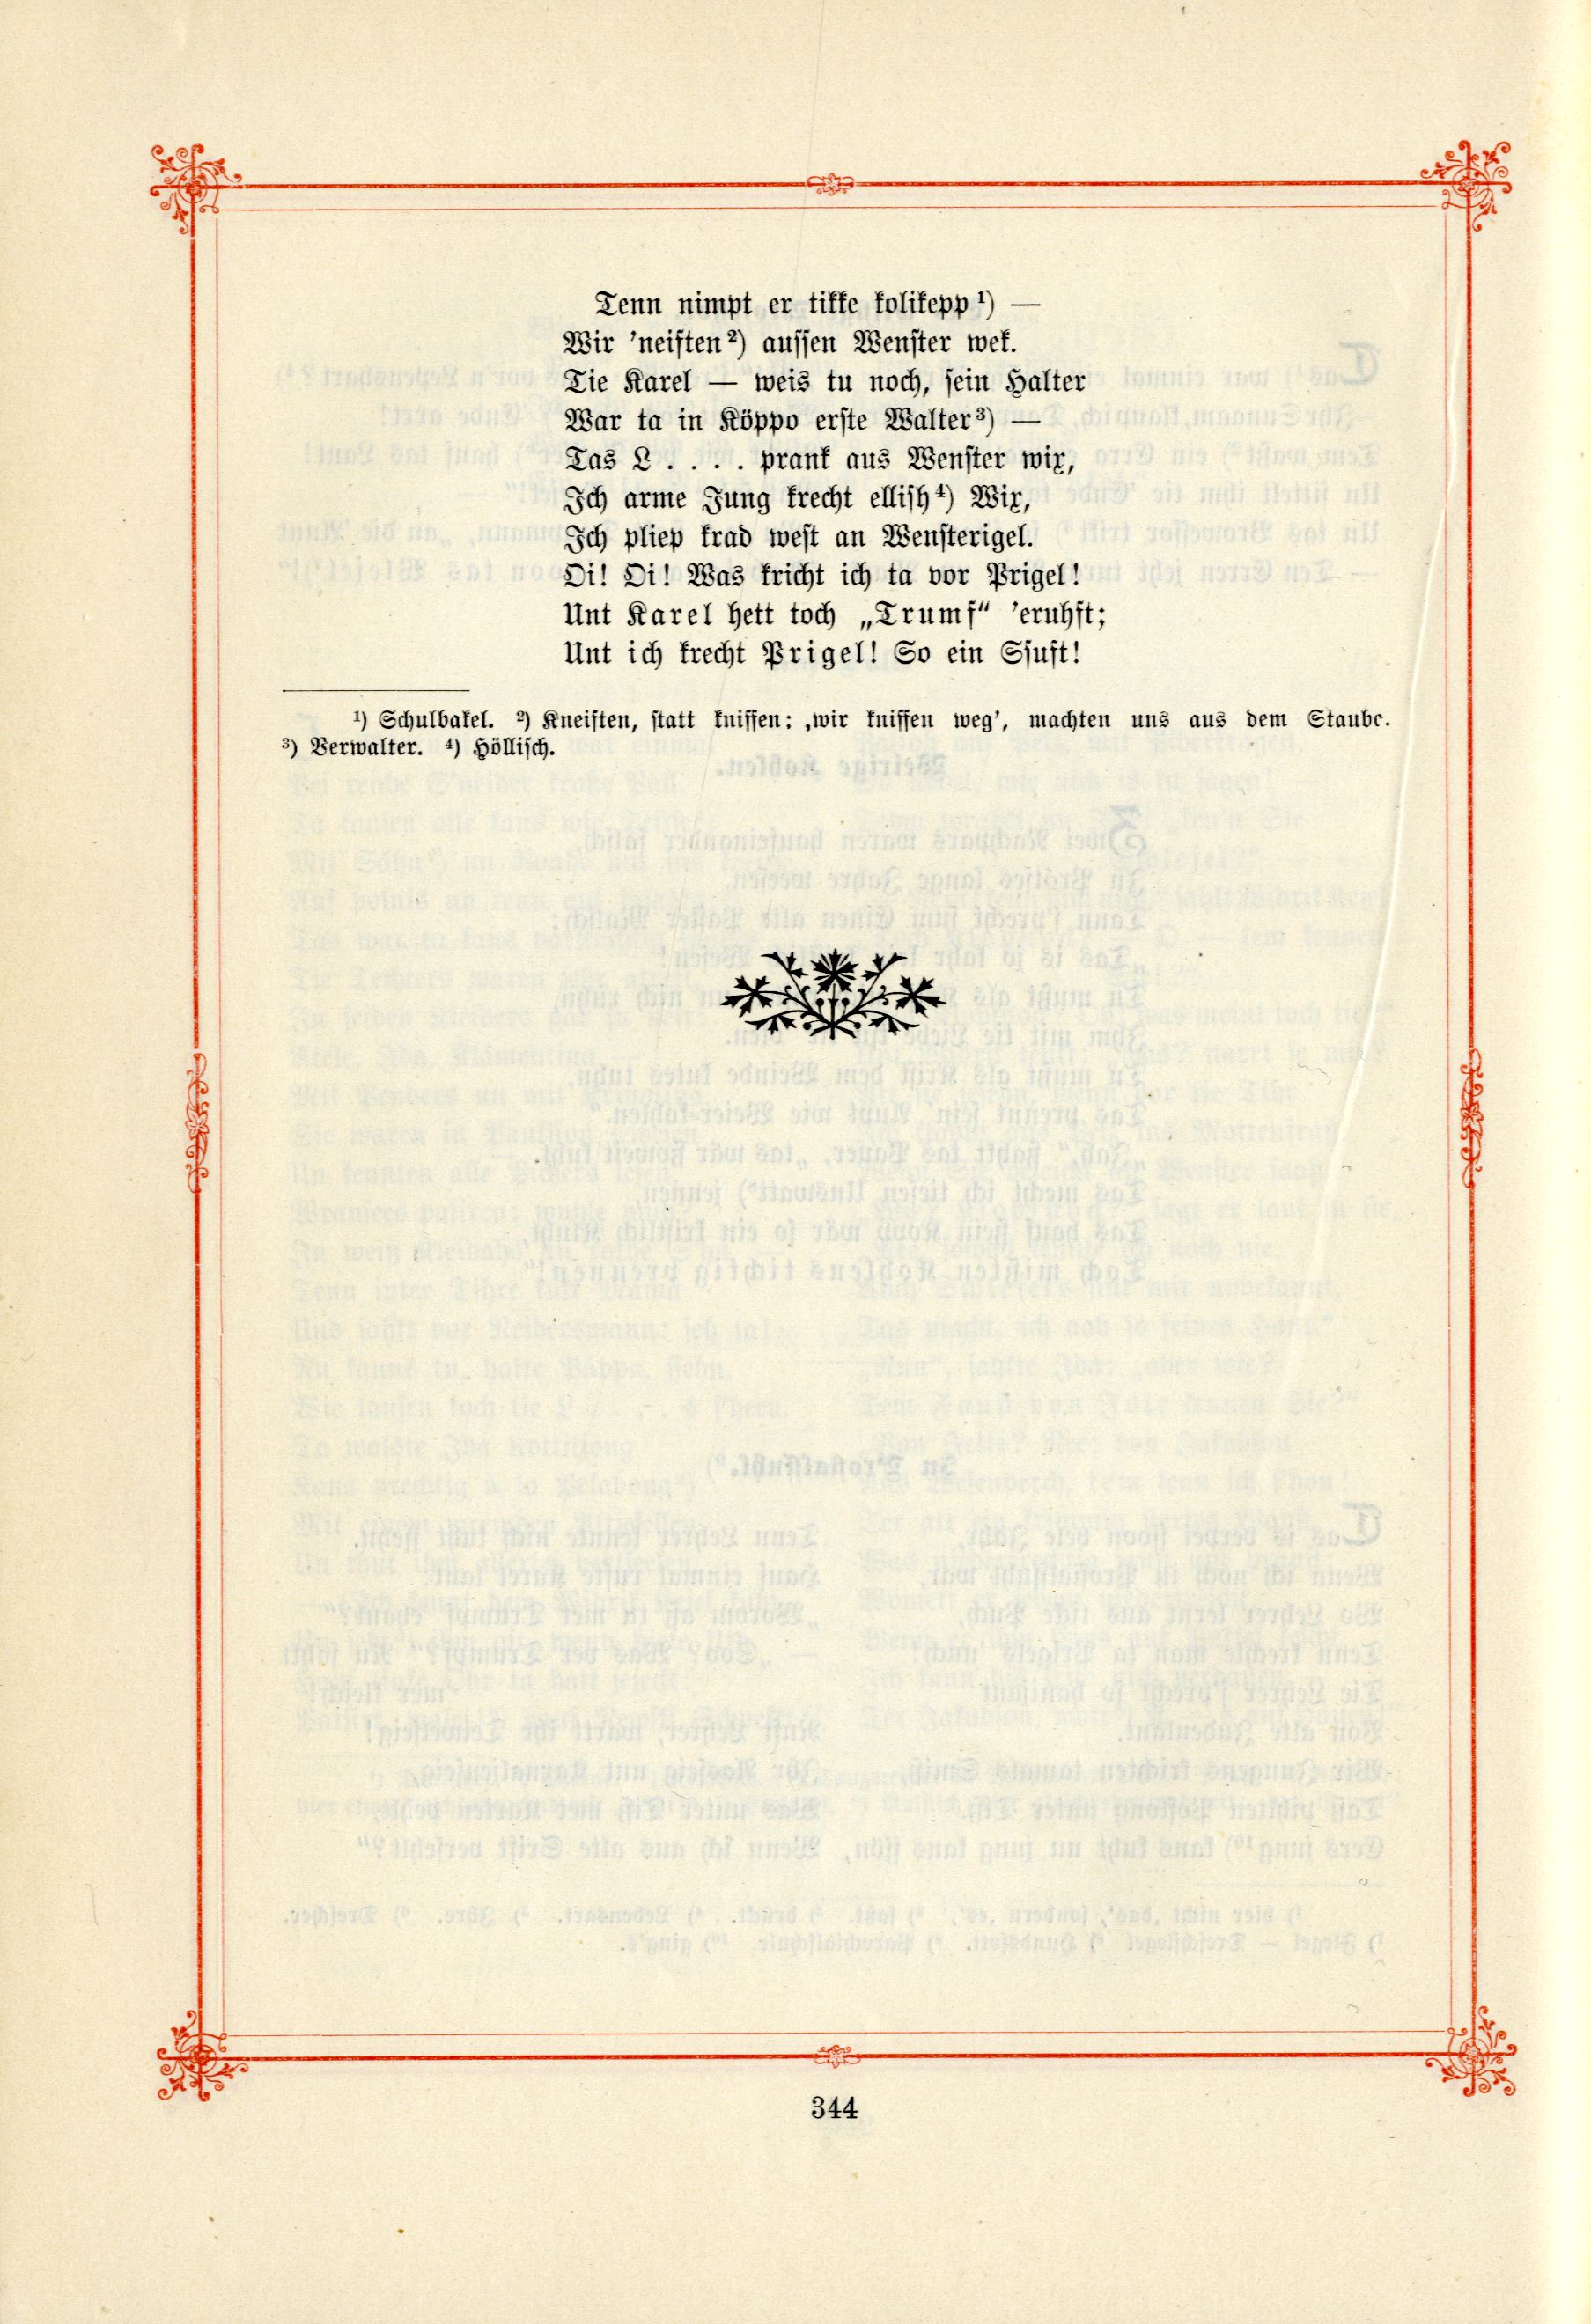 In Prosialssuhl (1895) | 2. (344) Основной текст